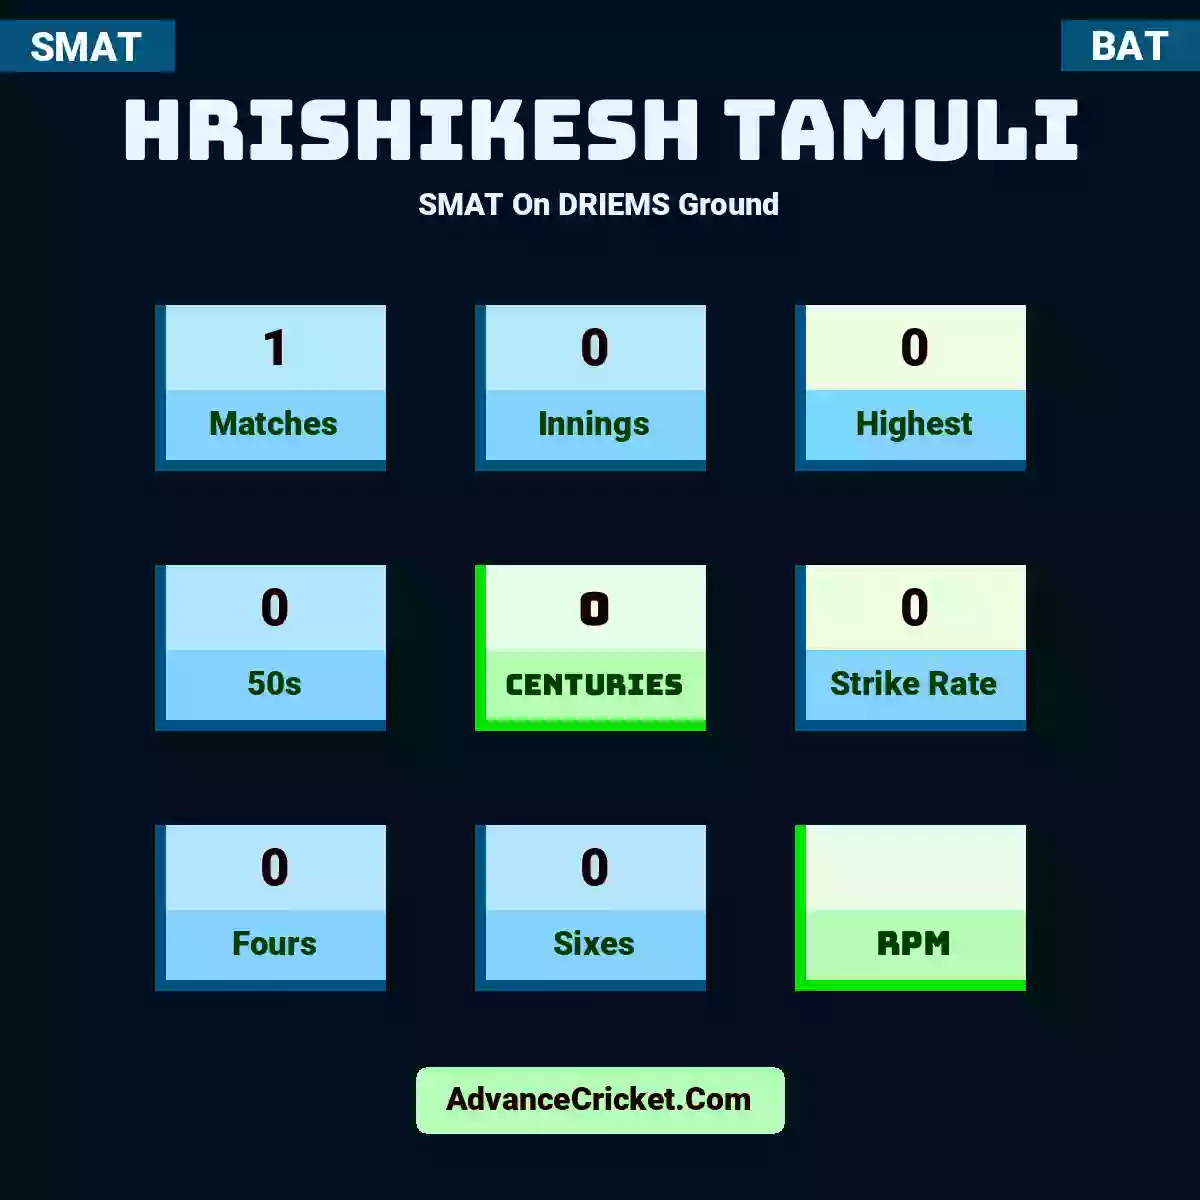 Hrishikesh Tamuli SMAT  On DRIEMS Ground, Hrishikesh Tamuli played 1 matches, scored 0 runs as highest, 0 half-centuries, and 0 centuries, with a strike rate of 0. H.Tamuli hit 0 fours and 0 sixes.